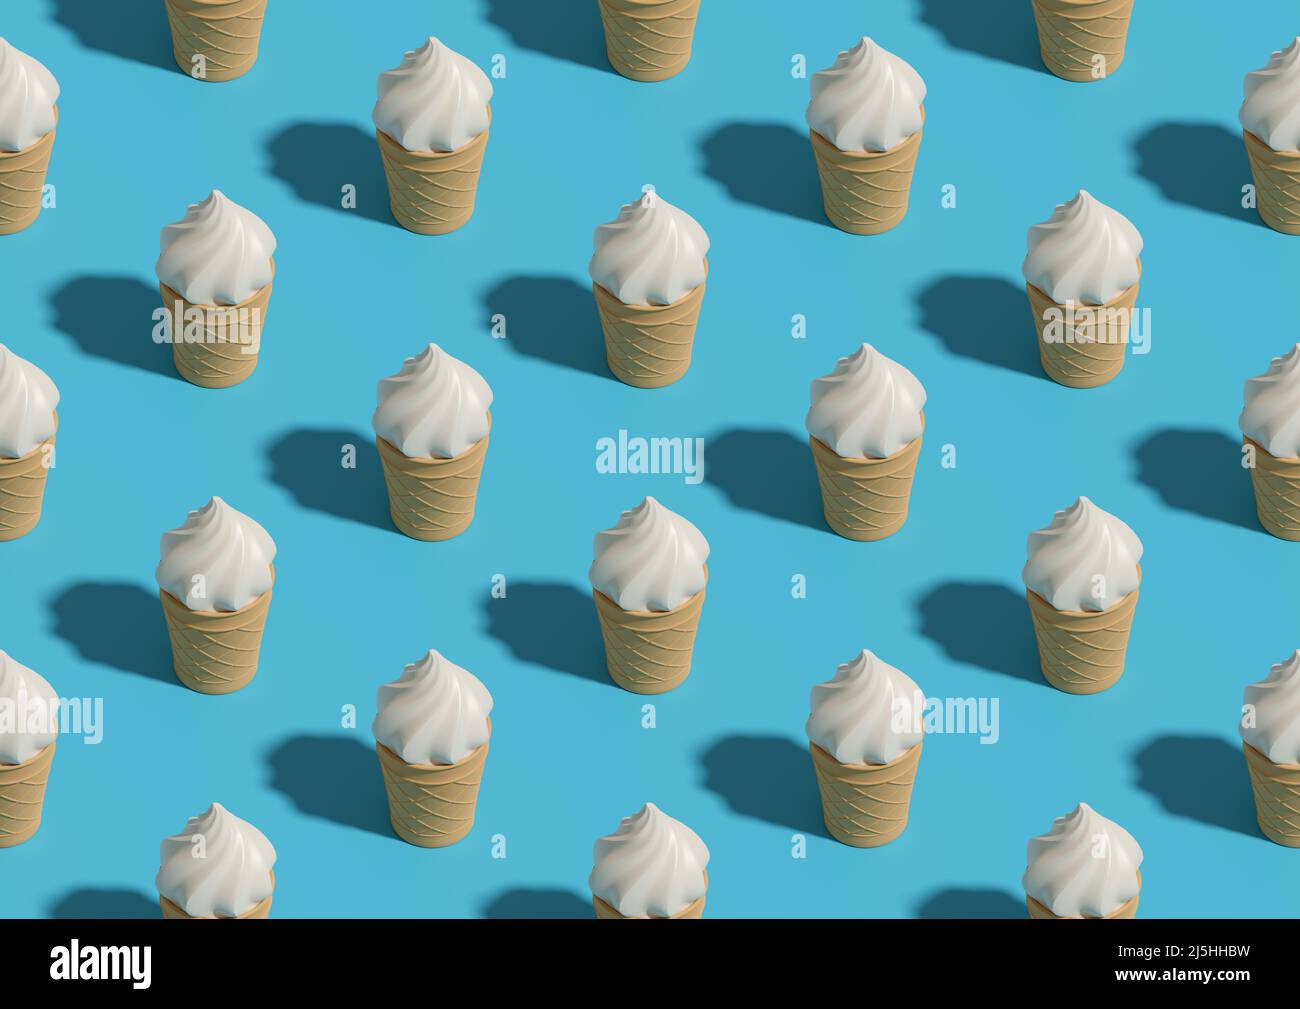 Vanilla ice cream cones. Isometric seamless pattern. 3d illustration. Stock Photo